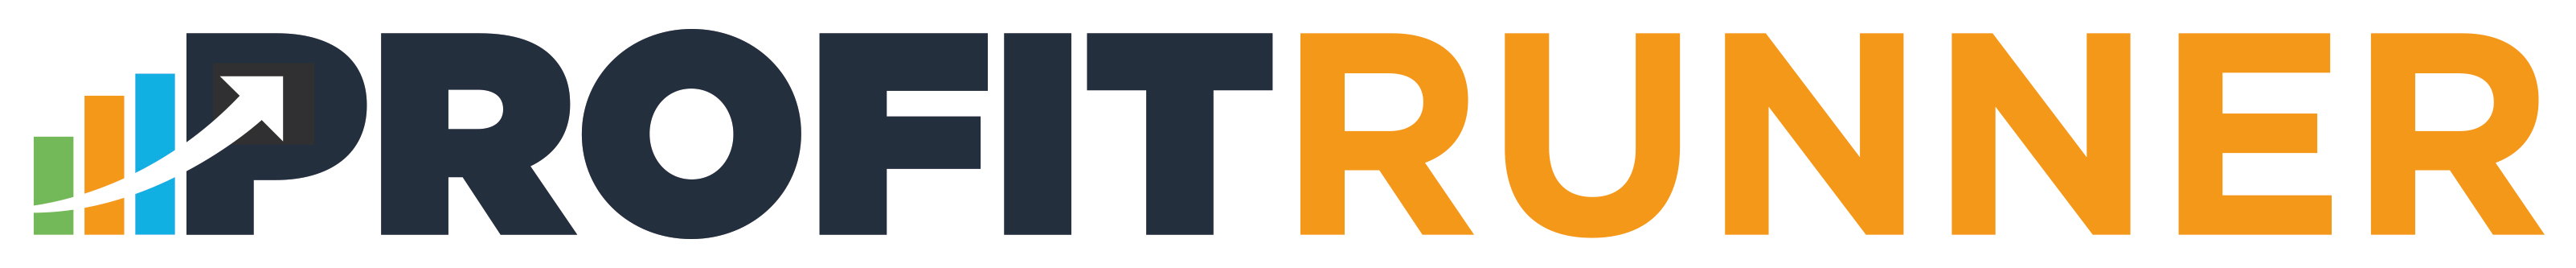 Profit Runner header logo home button